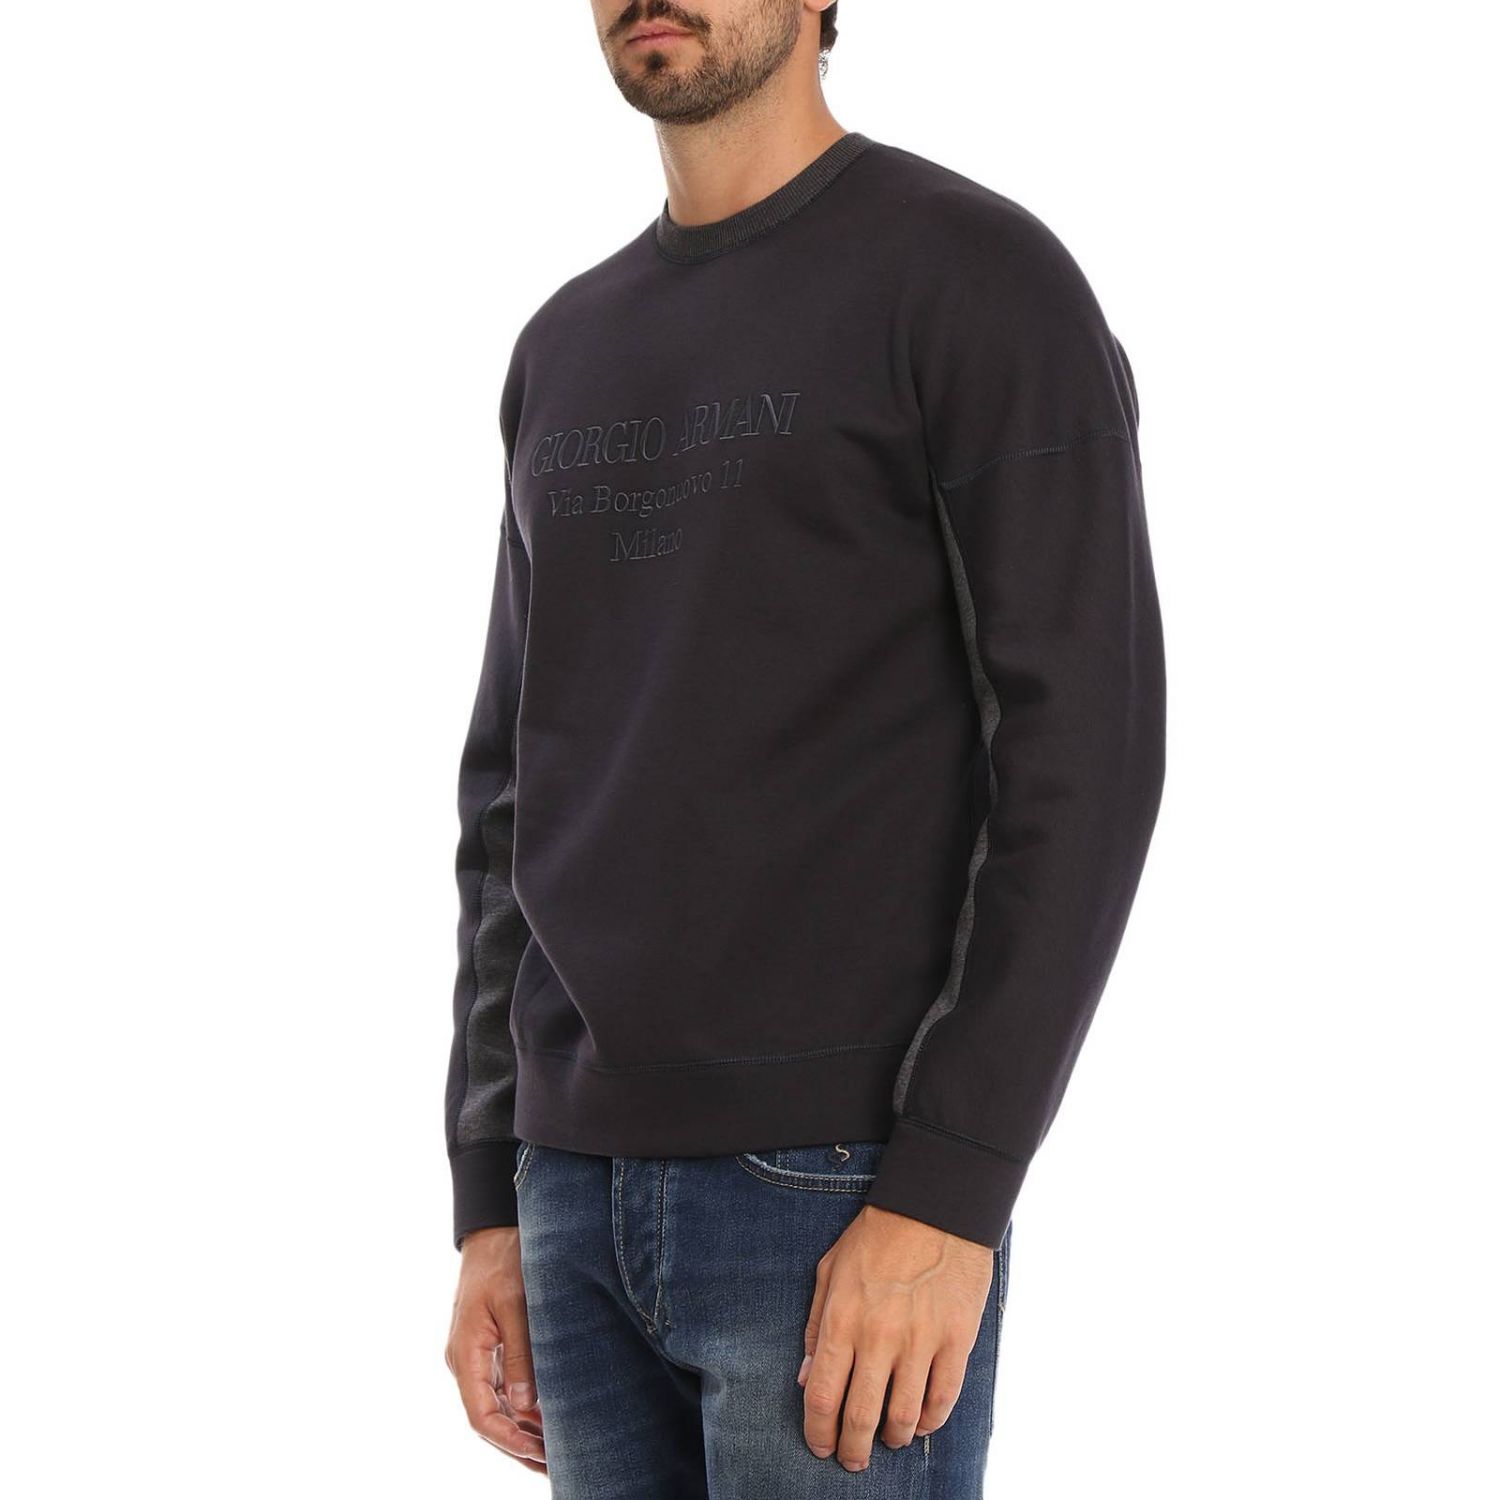 Giorgio Armani Outlet: Sweatshirt men | Sweatshirt Giorgio Armani Men ...